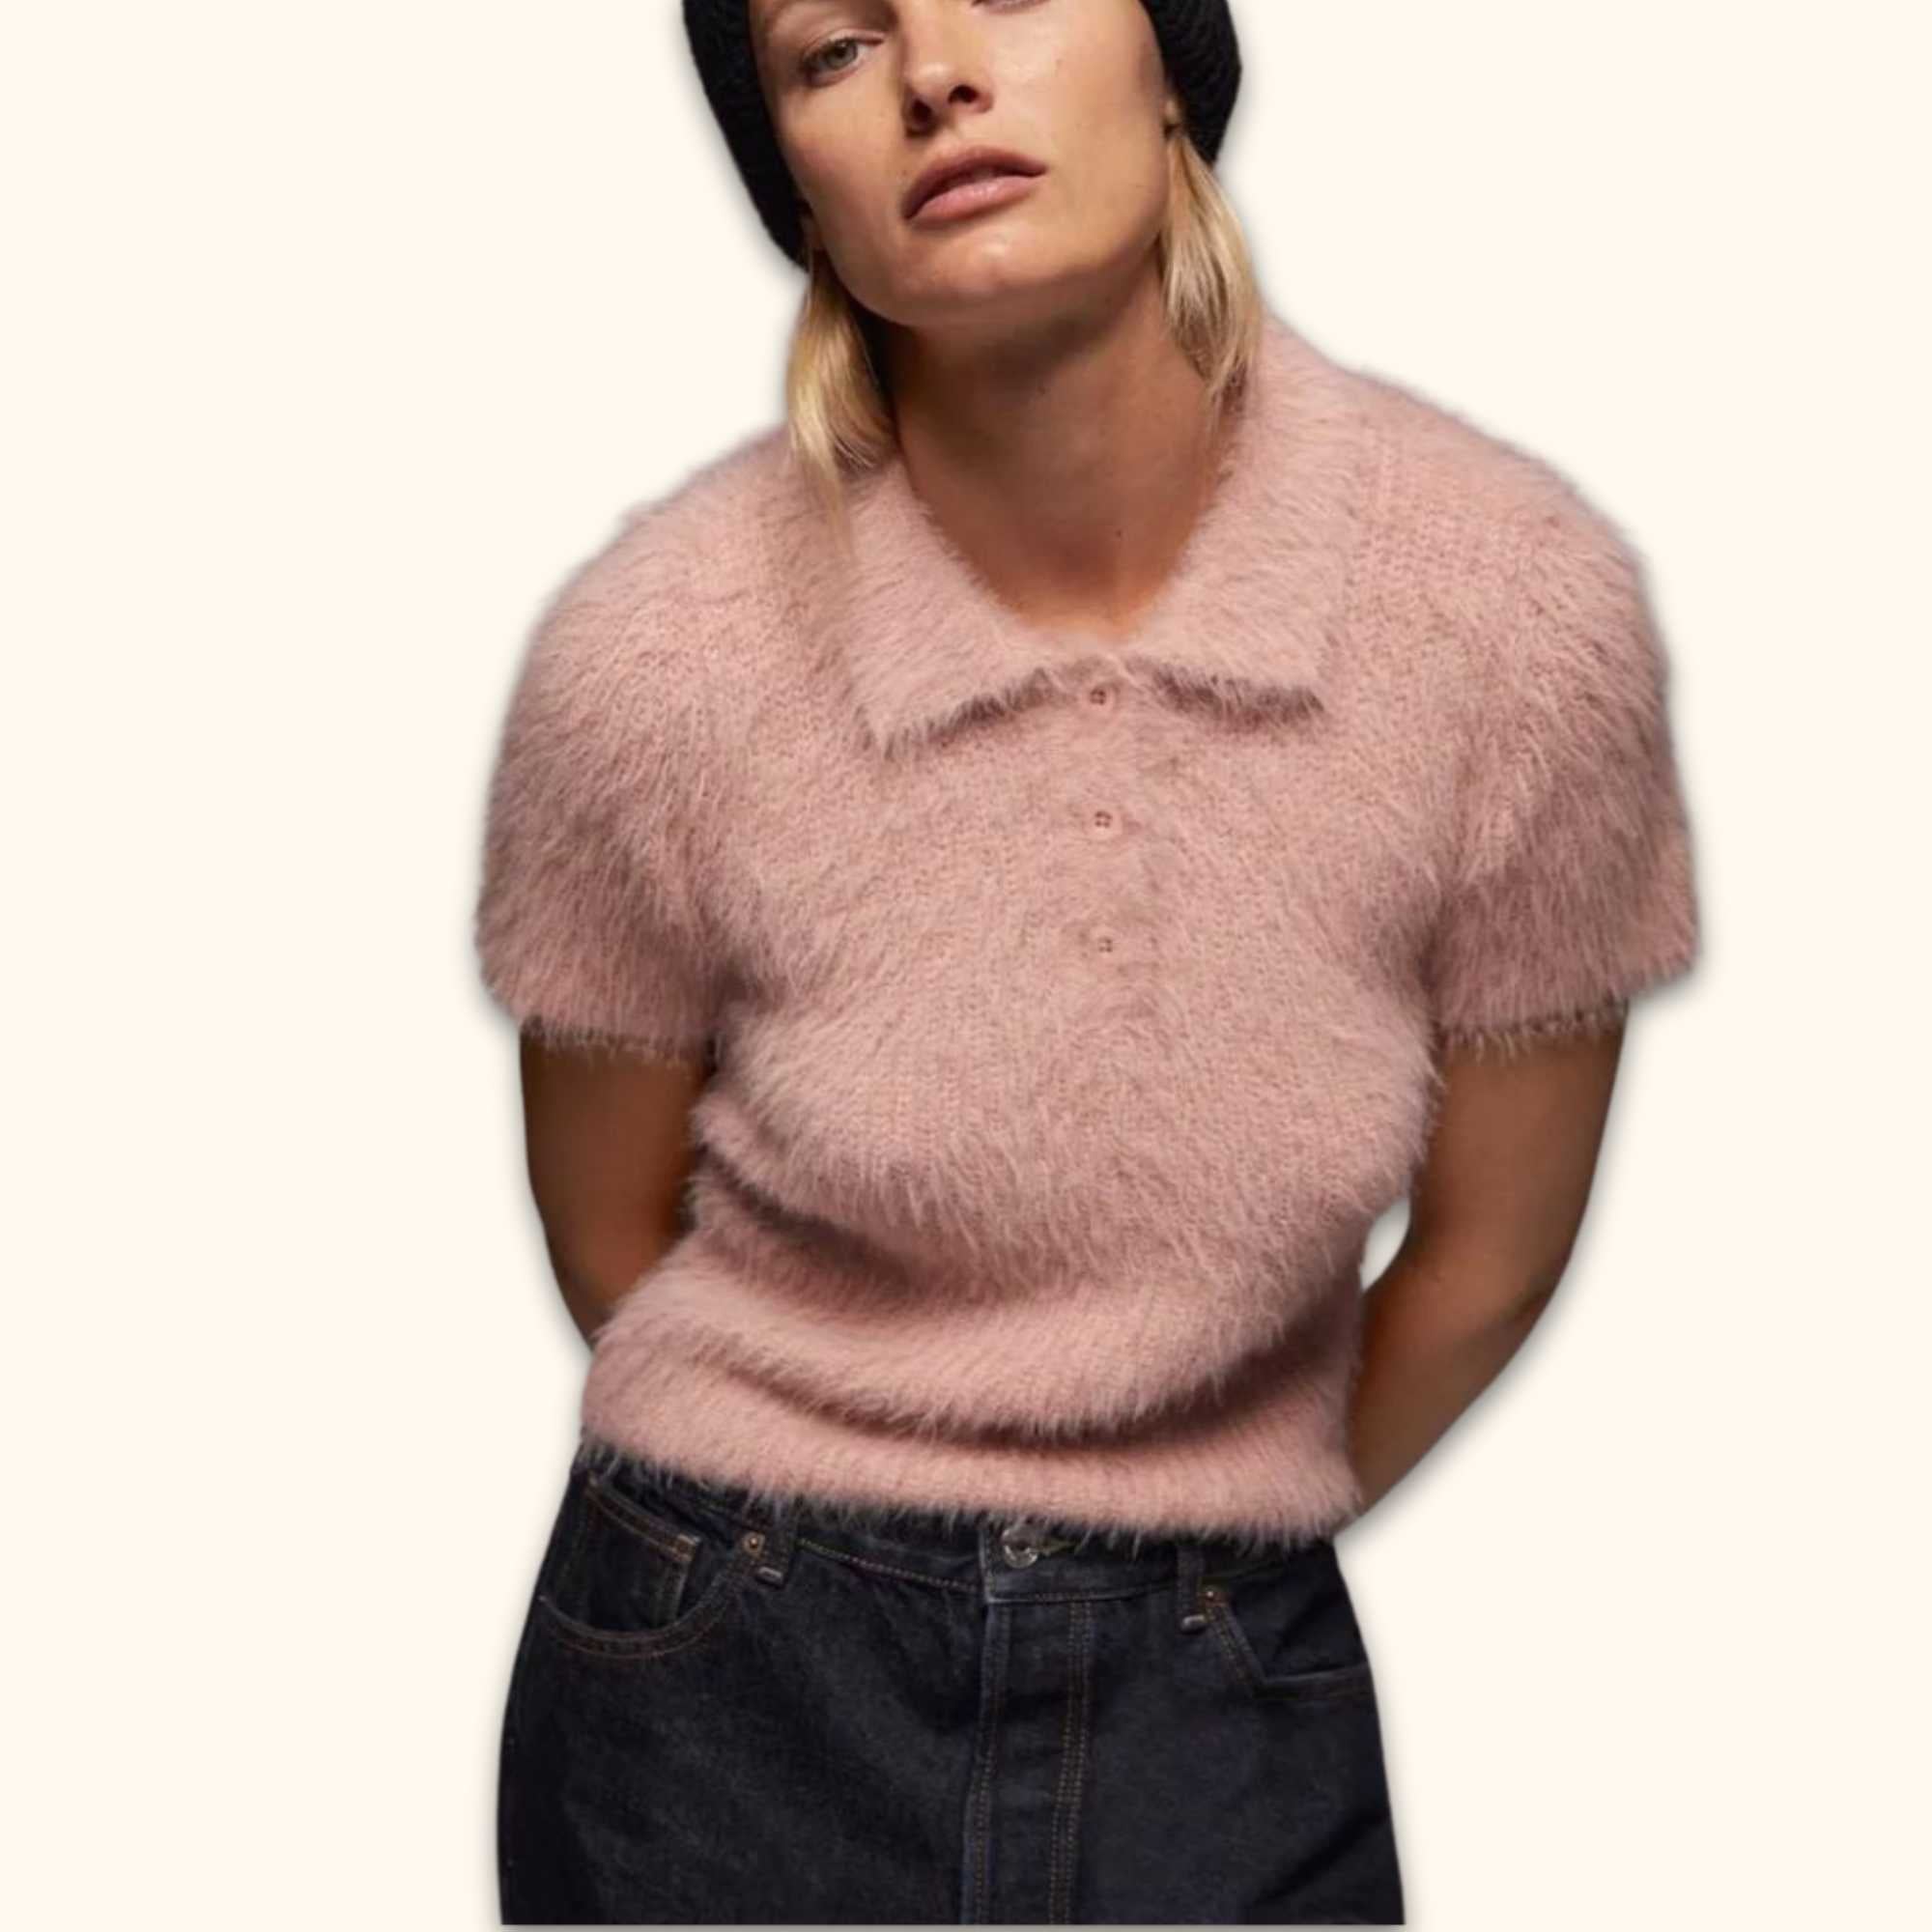 Zara Pink Faux Fur Short Sleeve Top - Size Small - Zara - Jumpers